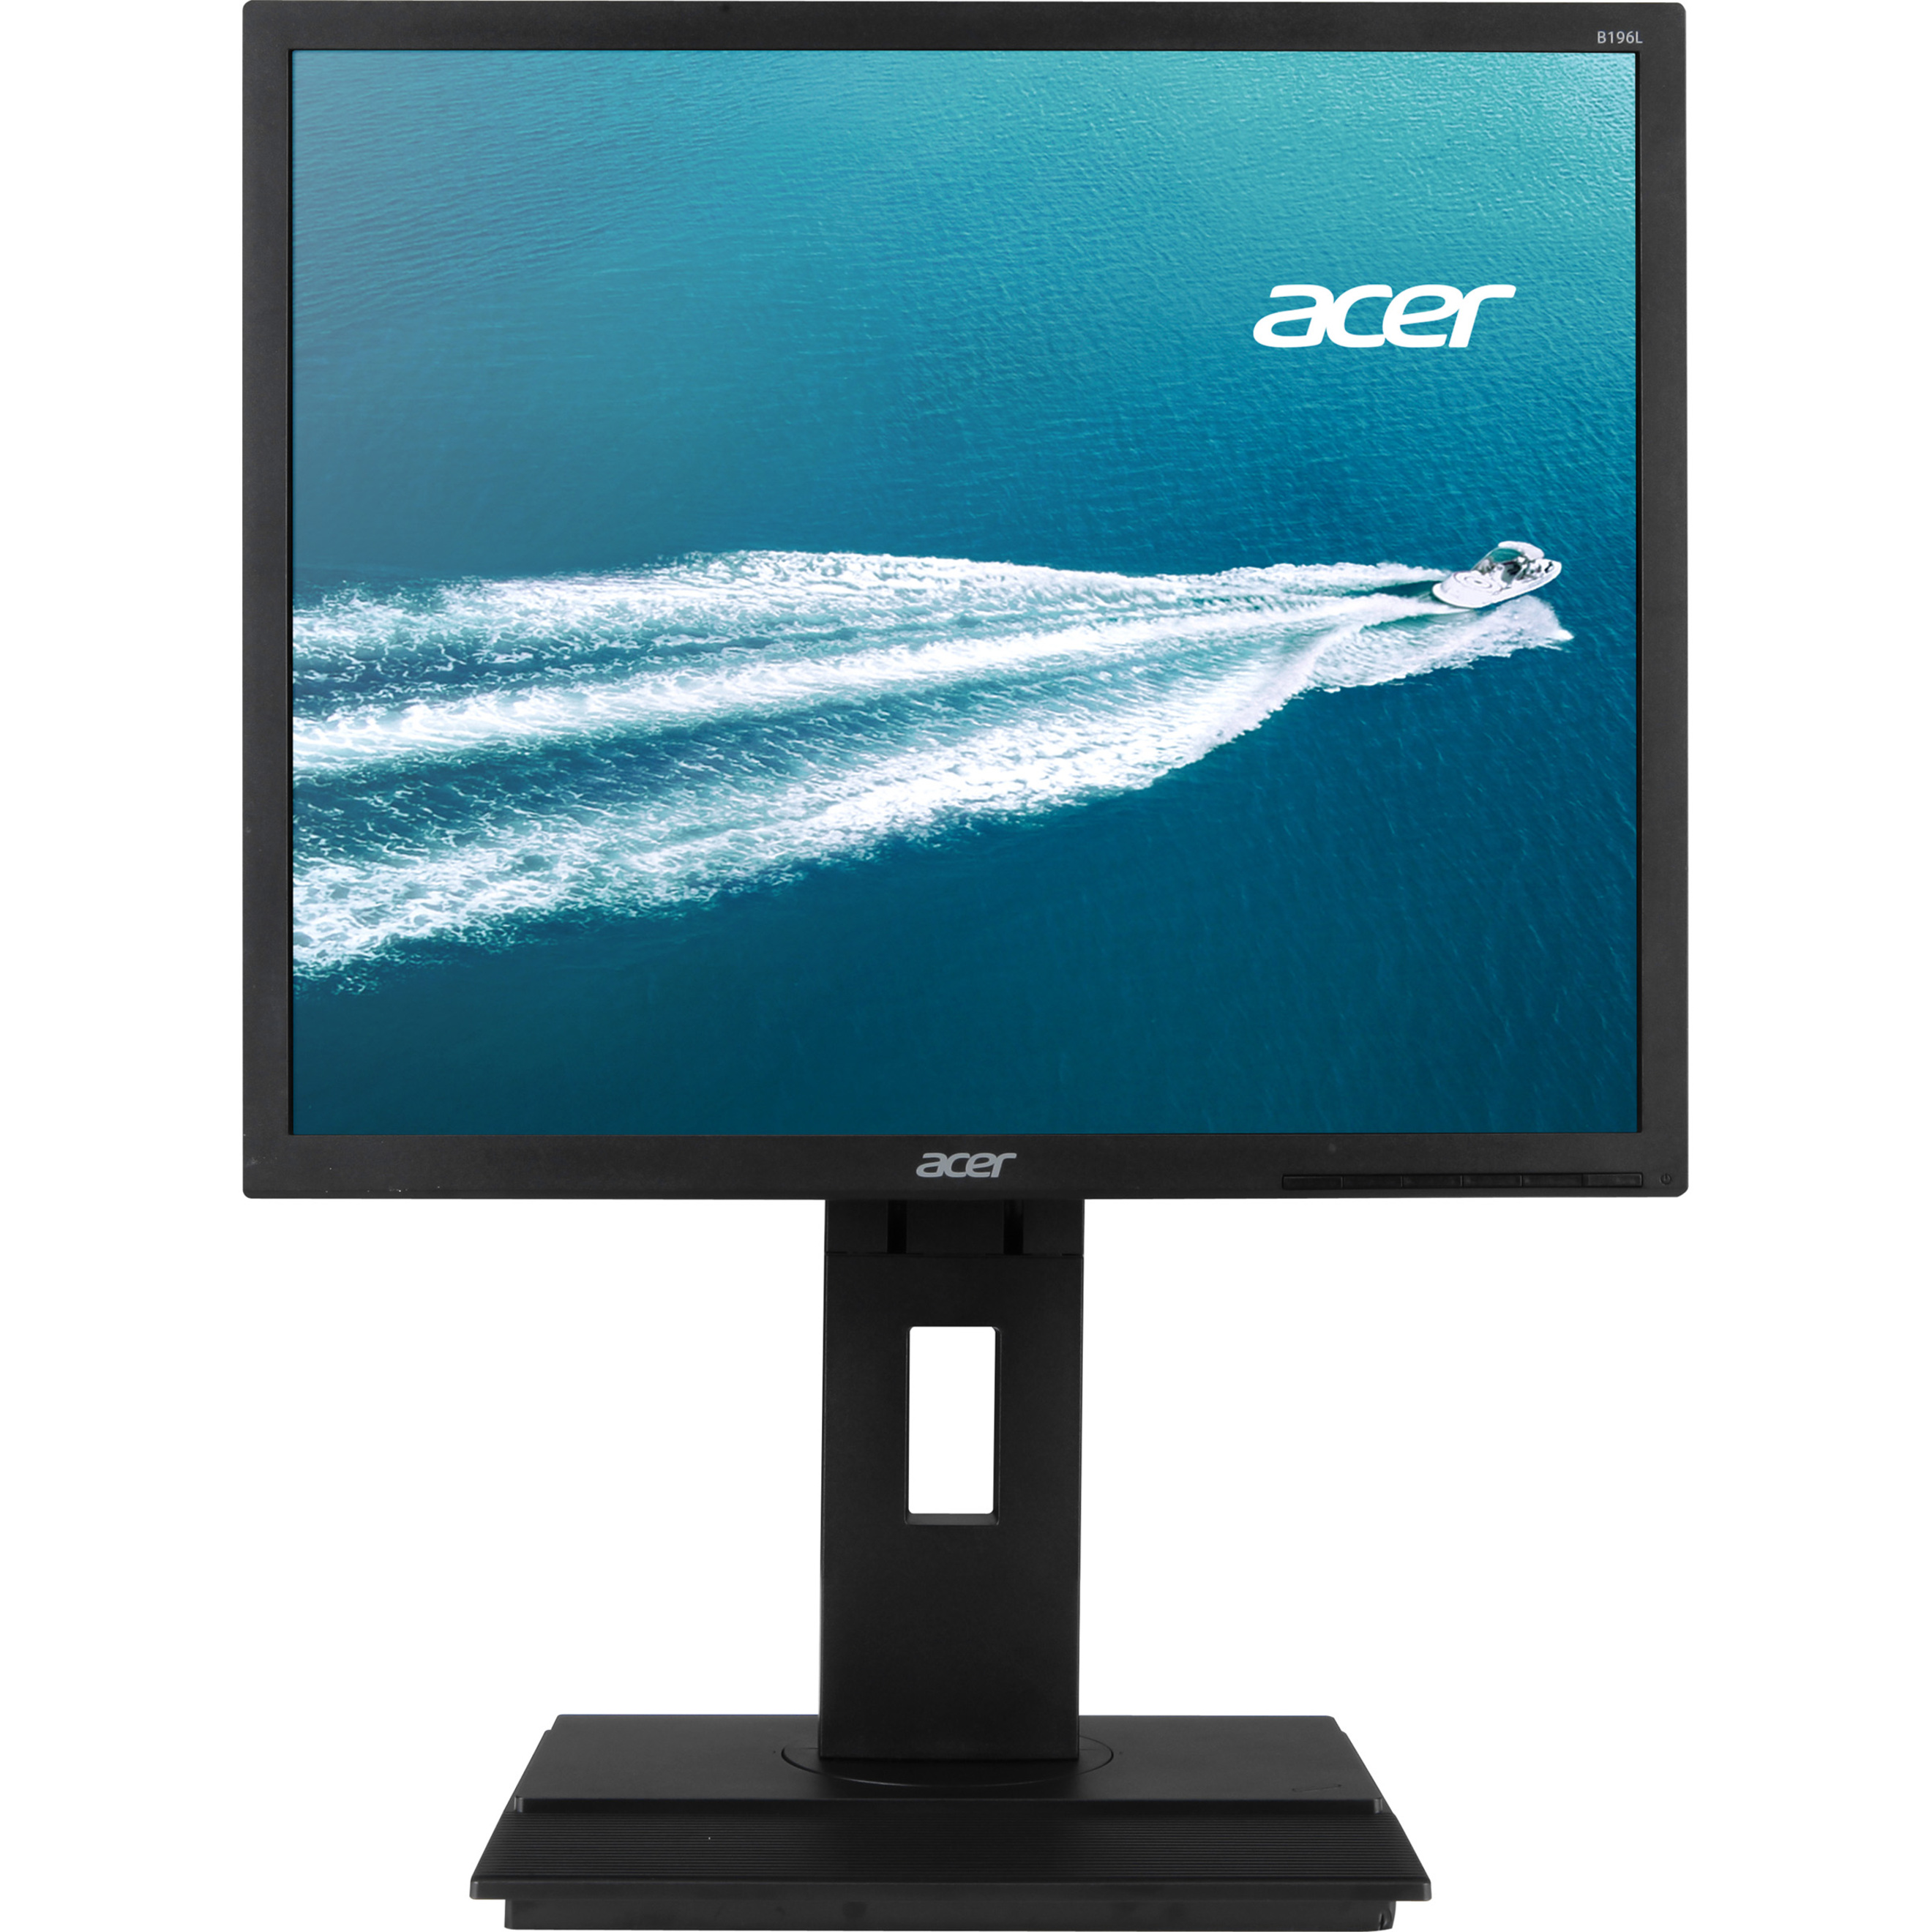 Acer B196L - LED monitor - 19" - image 5 of 5